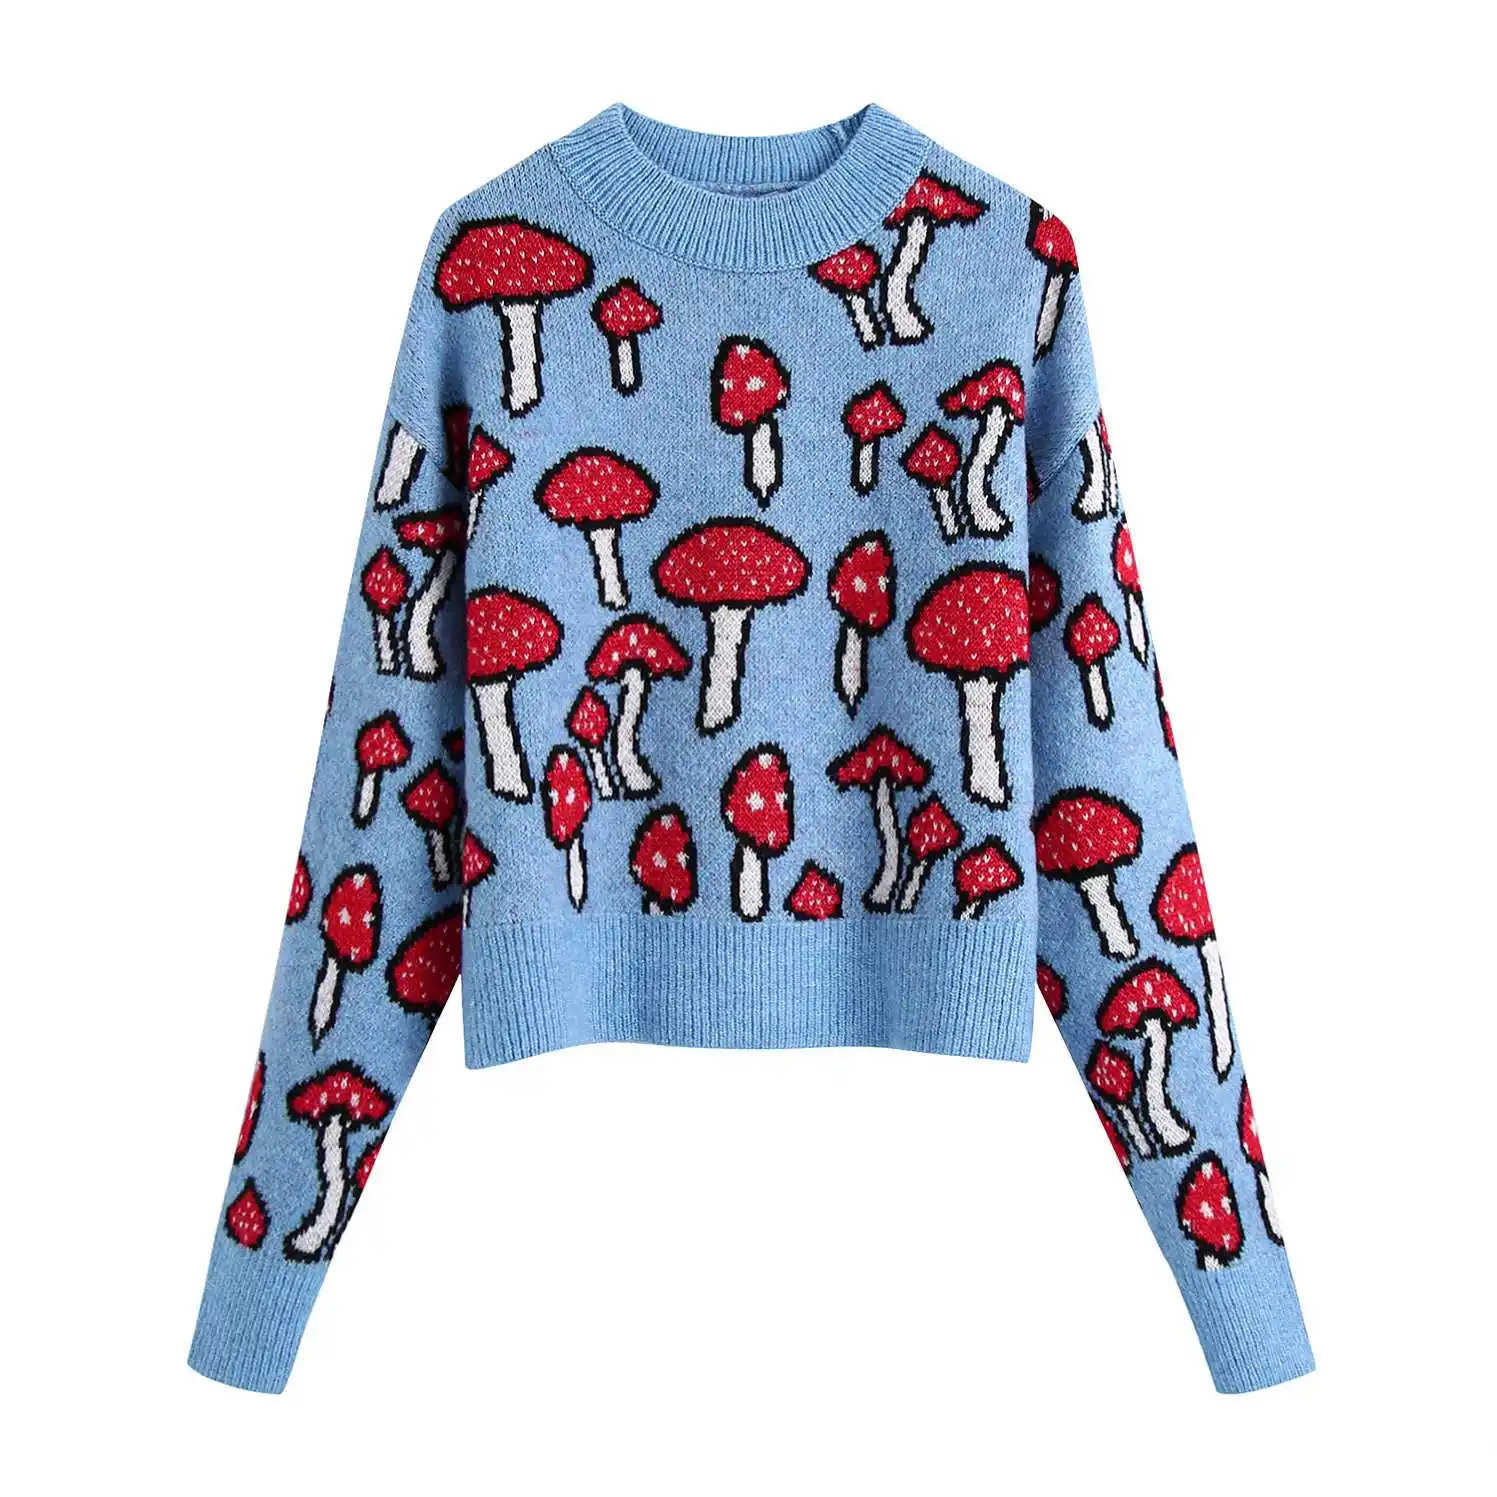 SH1646 Elegant casual warm winter mushroom pattern crew neck blue color long sleeve knit jumper women causal pullover sweater